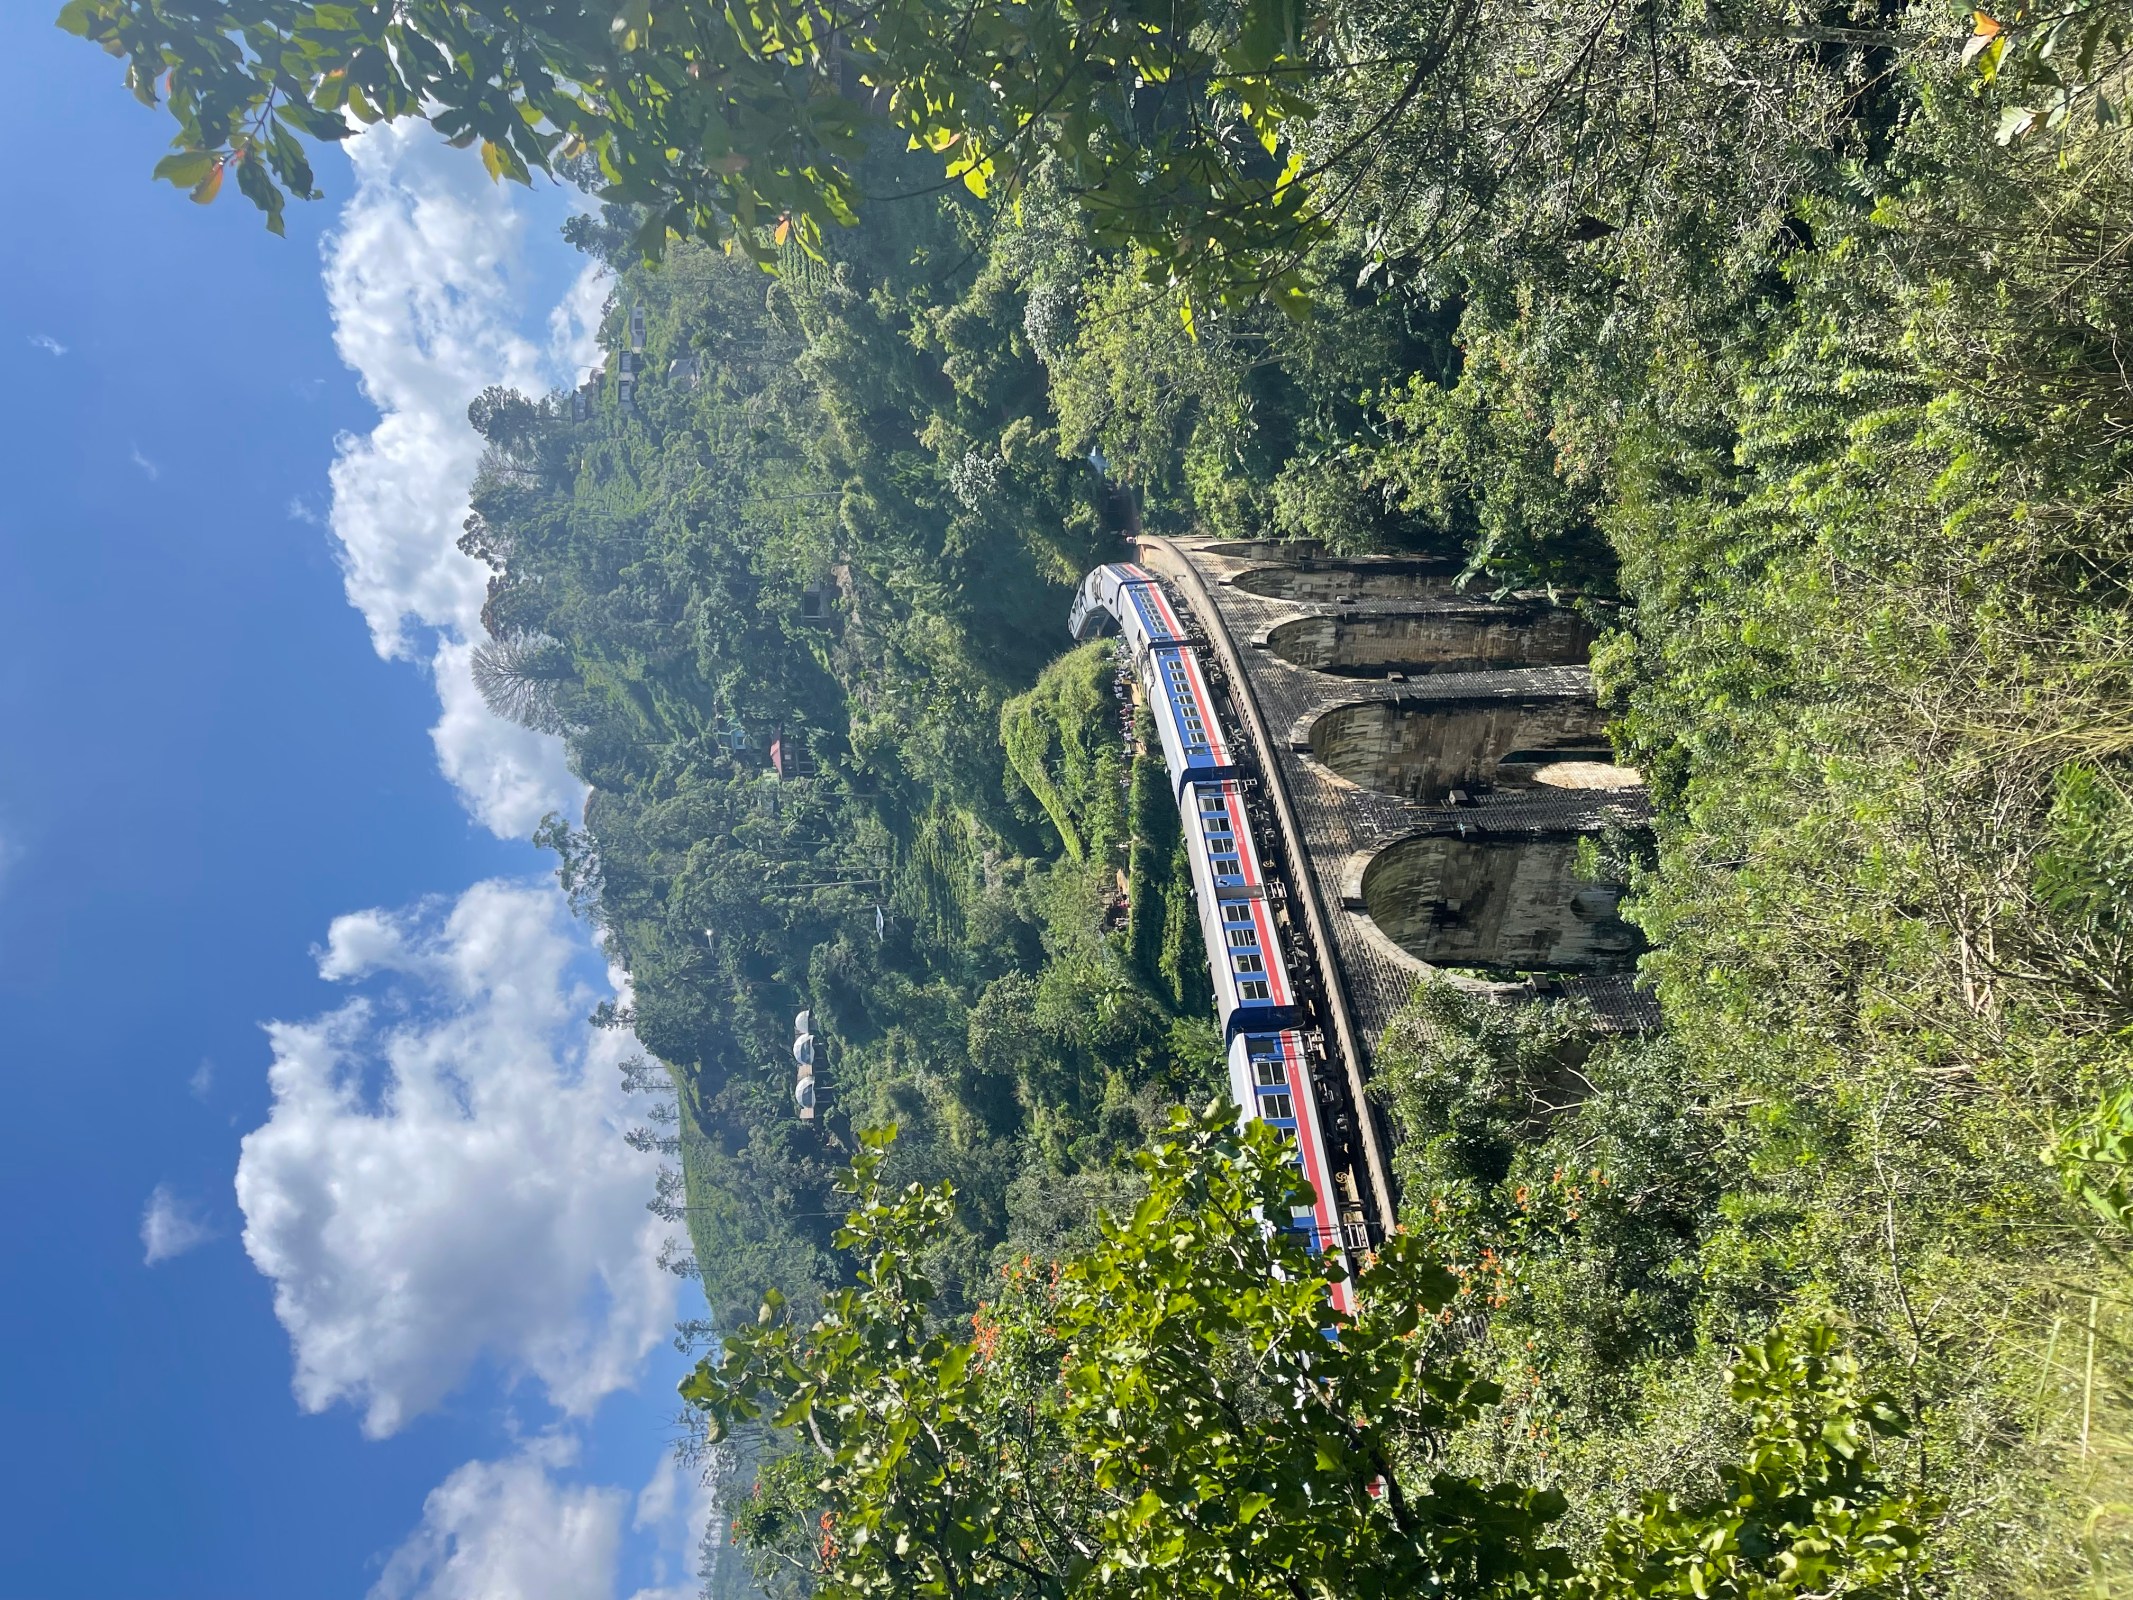 Train ride through Sri Lanka’s tea country